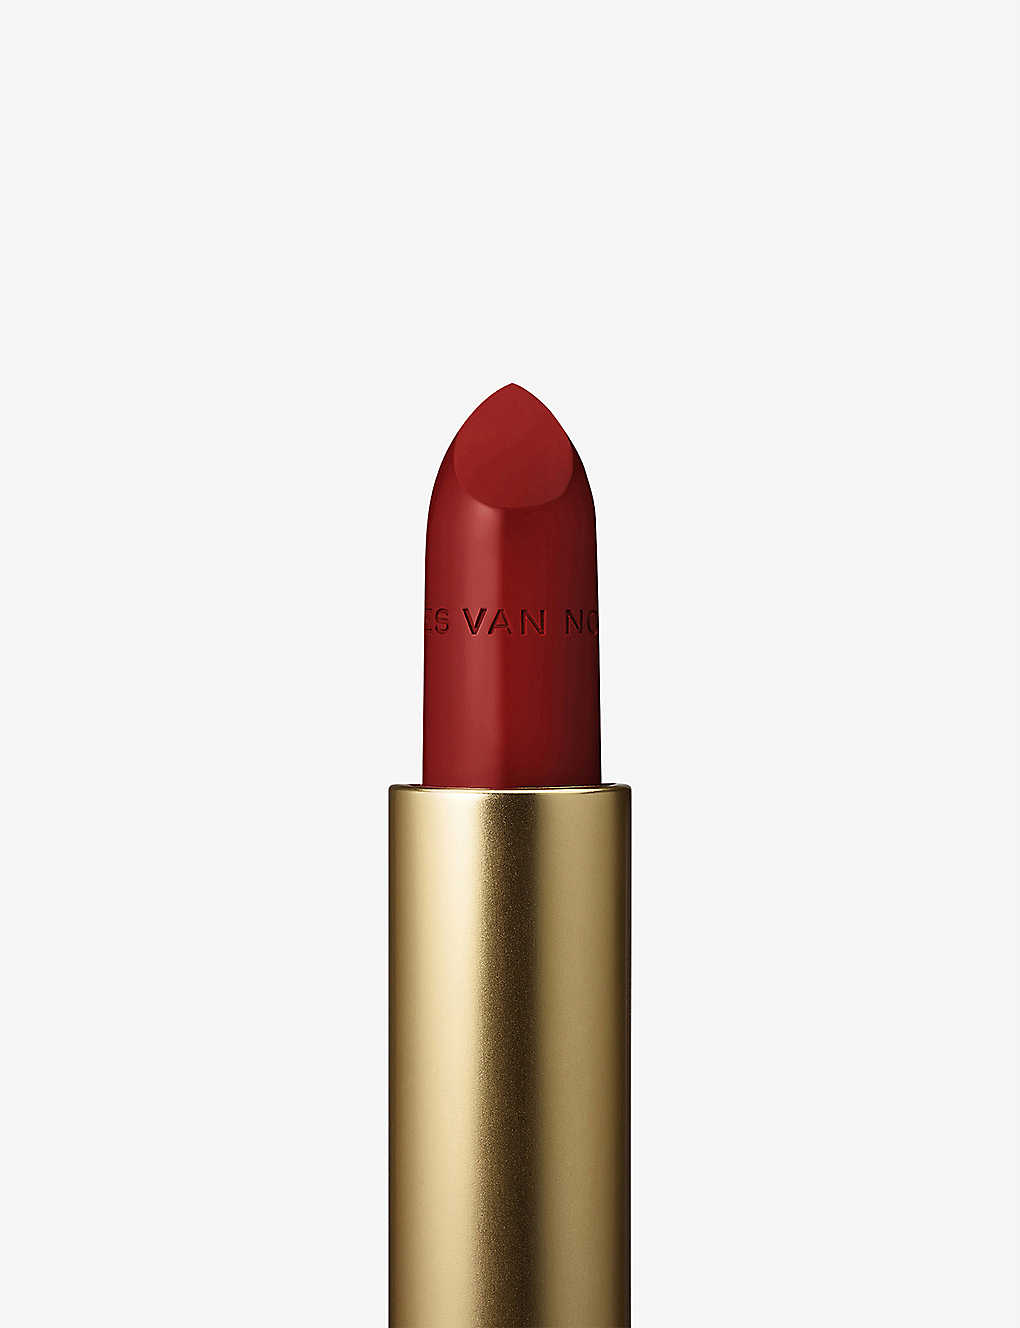 Dries Van Noten 99 Favorite Red Satin Lipstick Refill 4g